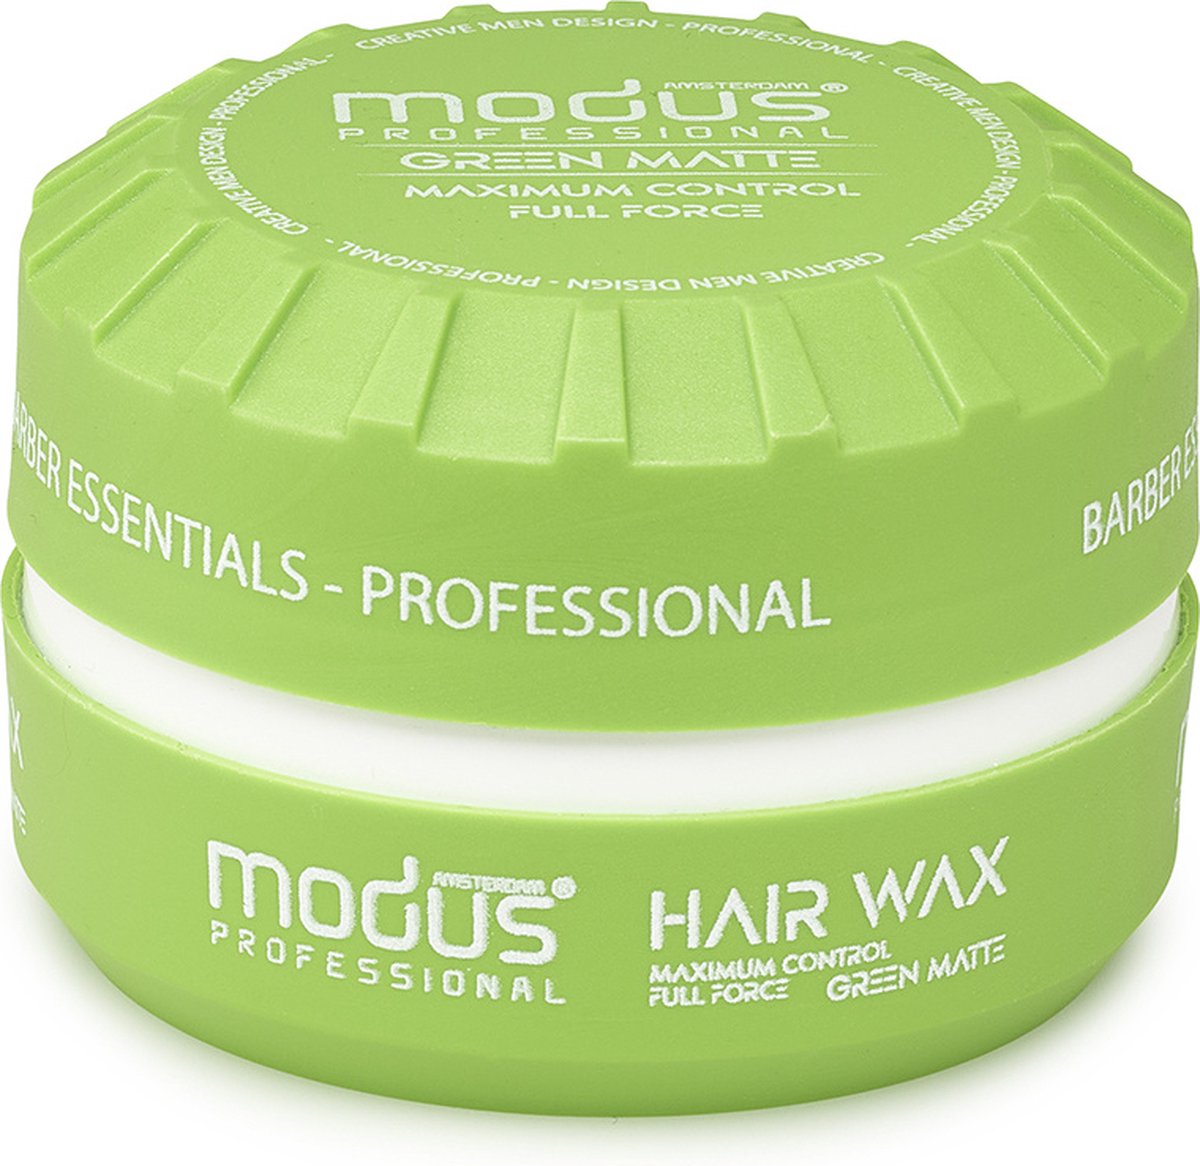 Modus Extra Dynamic Control Matte Look - Green Aqua Wax - 150ml